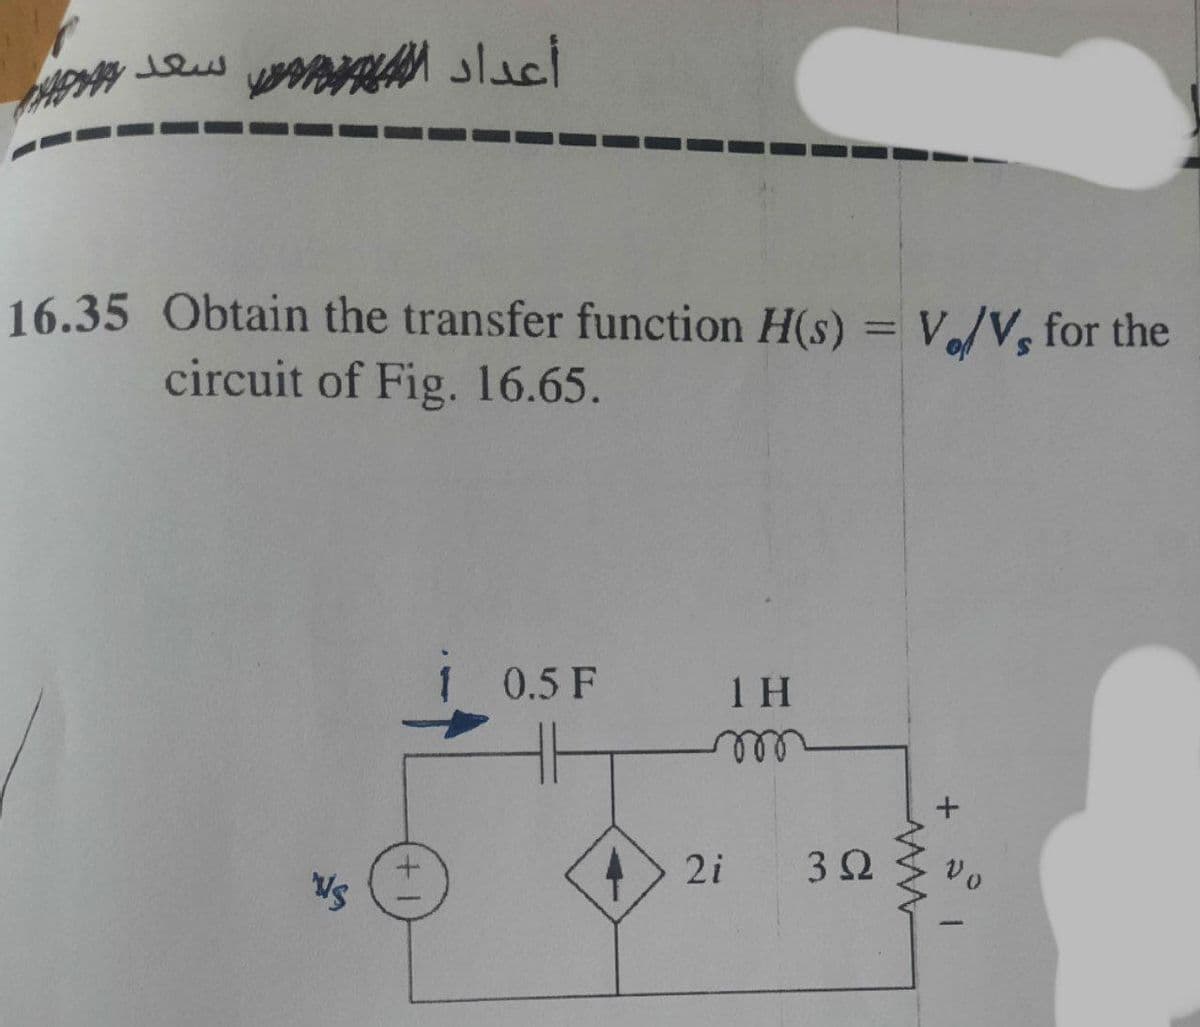 أعداد ا سعد من
-
16.35 Obtain the transfer function H(s) = V/V, for the
circuit of Fig. 16.65.
W
+
0.5F
TH
mo
2i
32
www